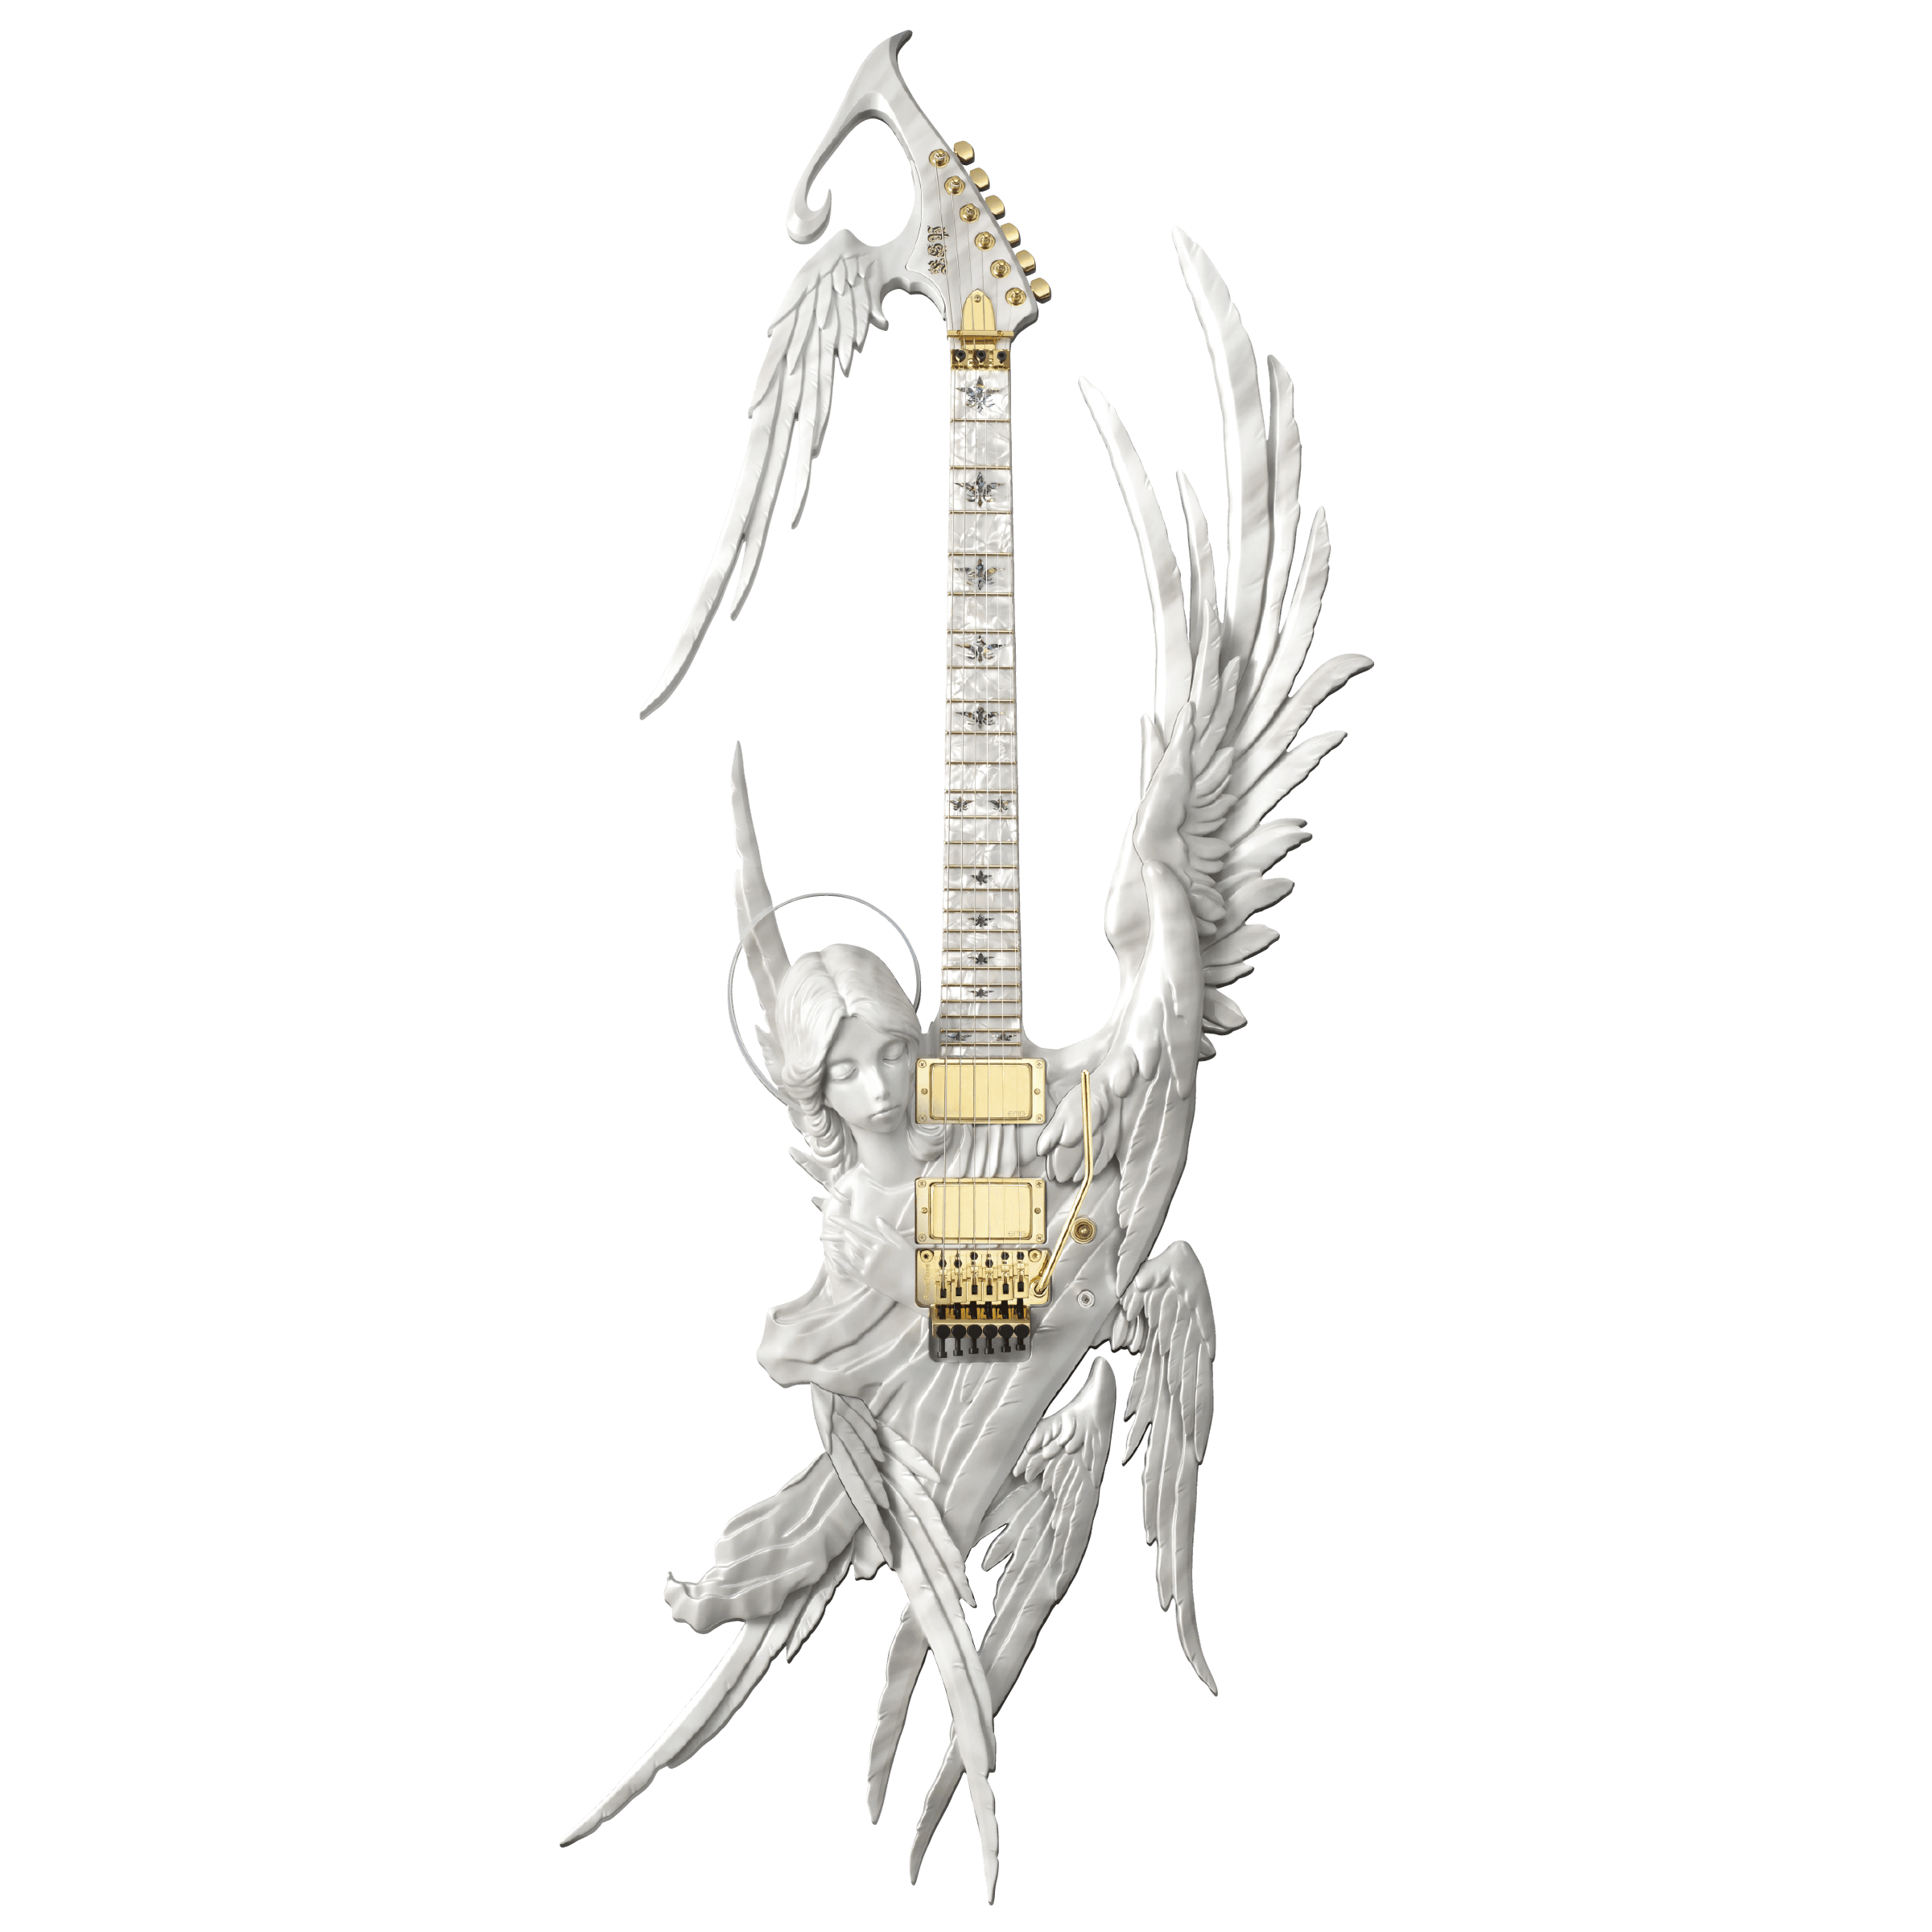 Angel included. Гитара модель ESP Ultimate Archangel. Тошихико Такамизава гитара. Ангел с гитарой. Архангел с гитарой.